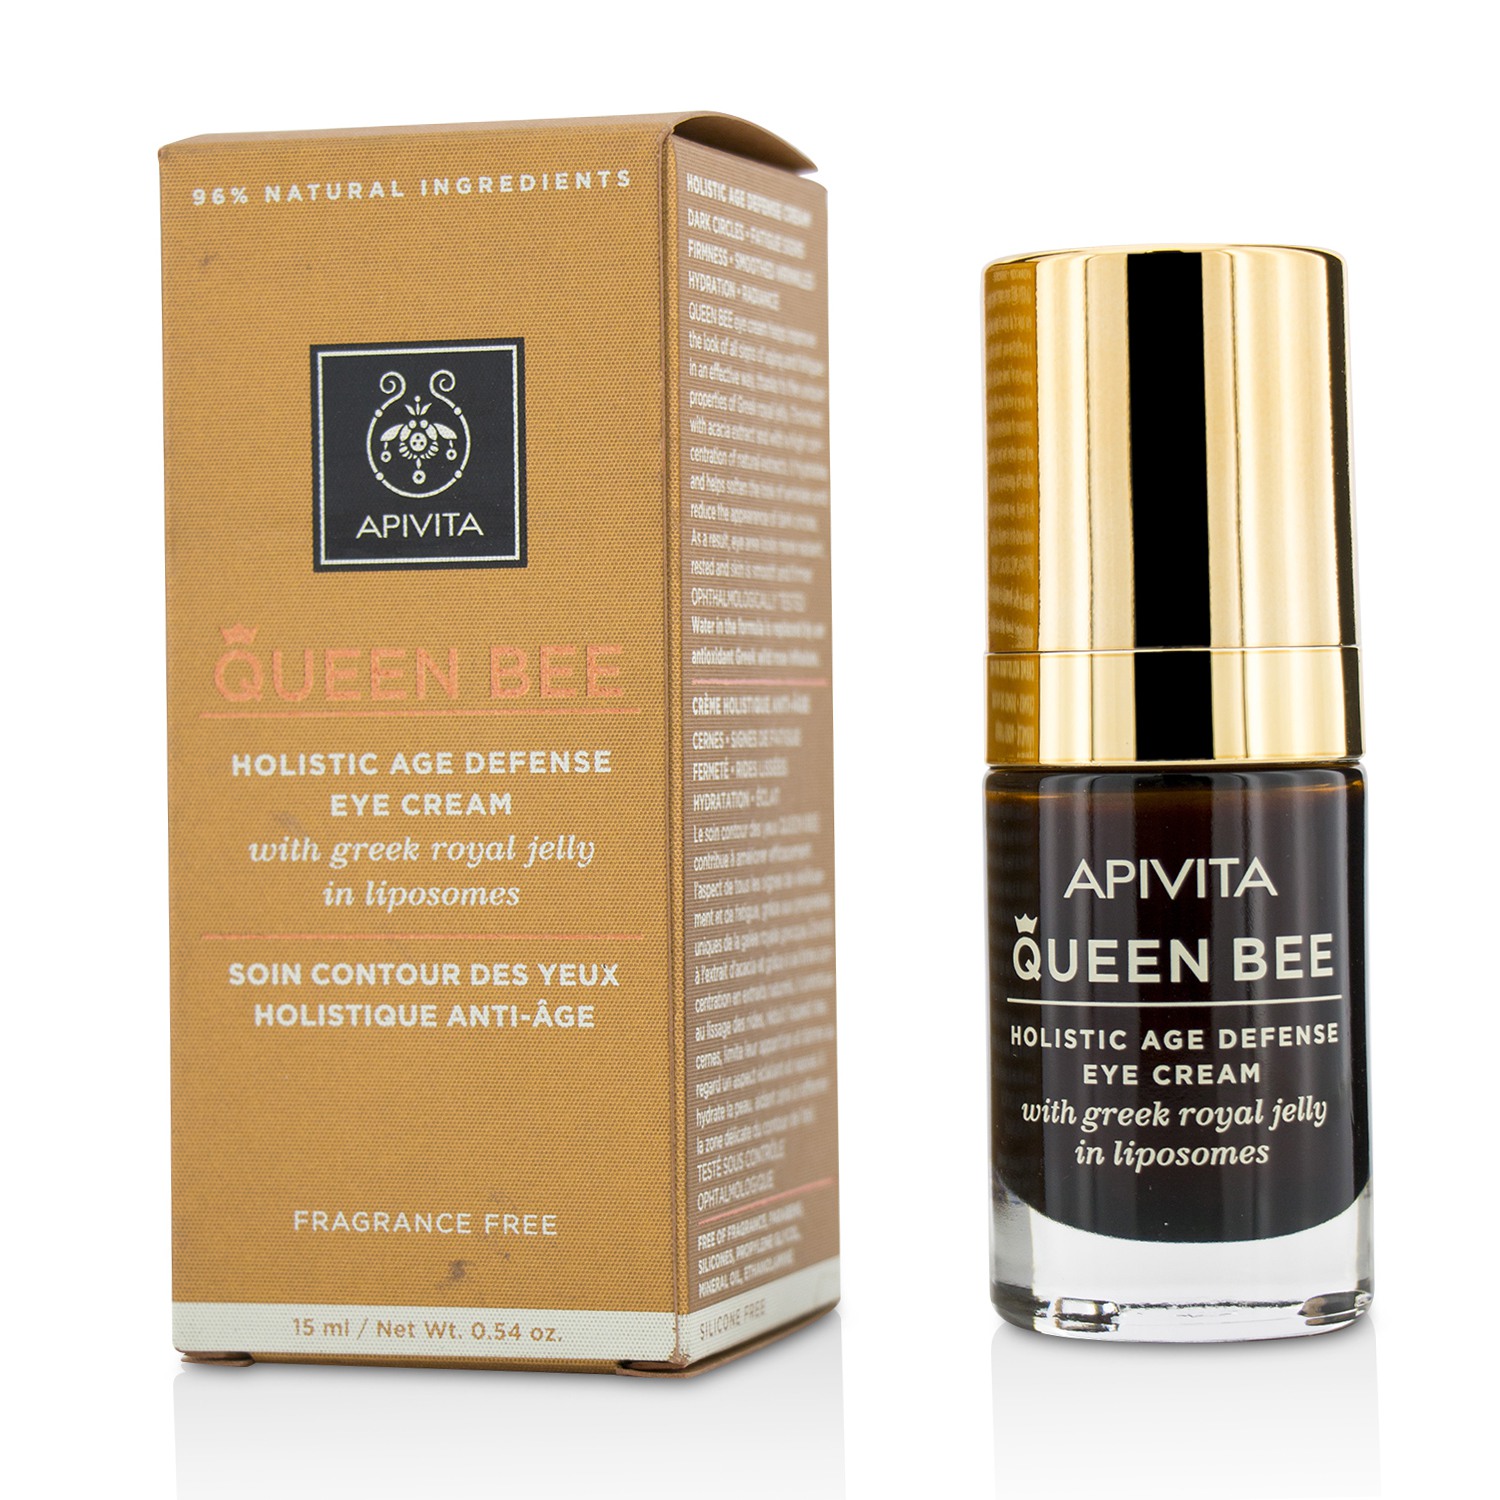 Queen Bee Holistic Age Defense Eye Cream Apivita Image